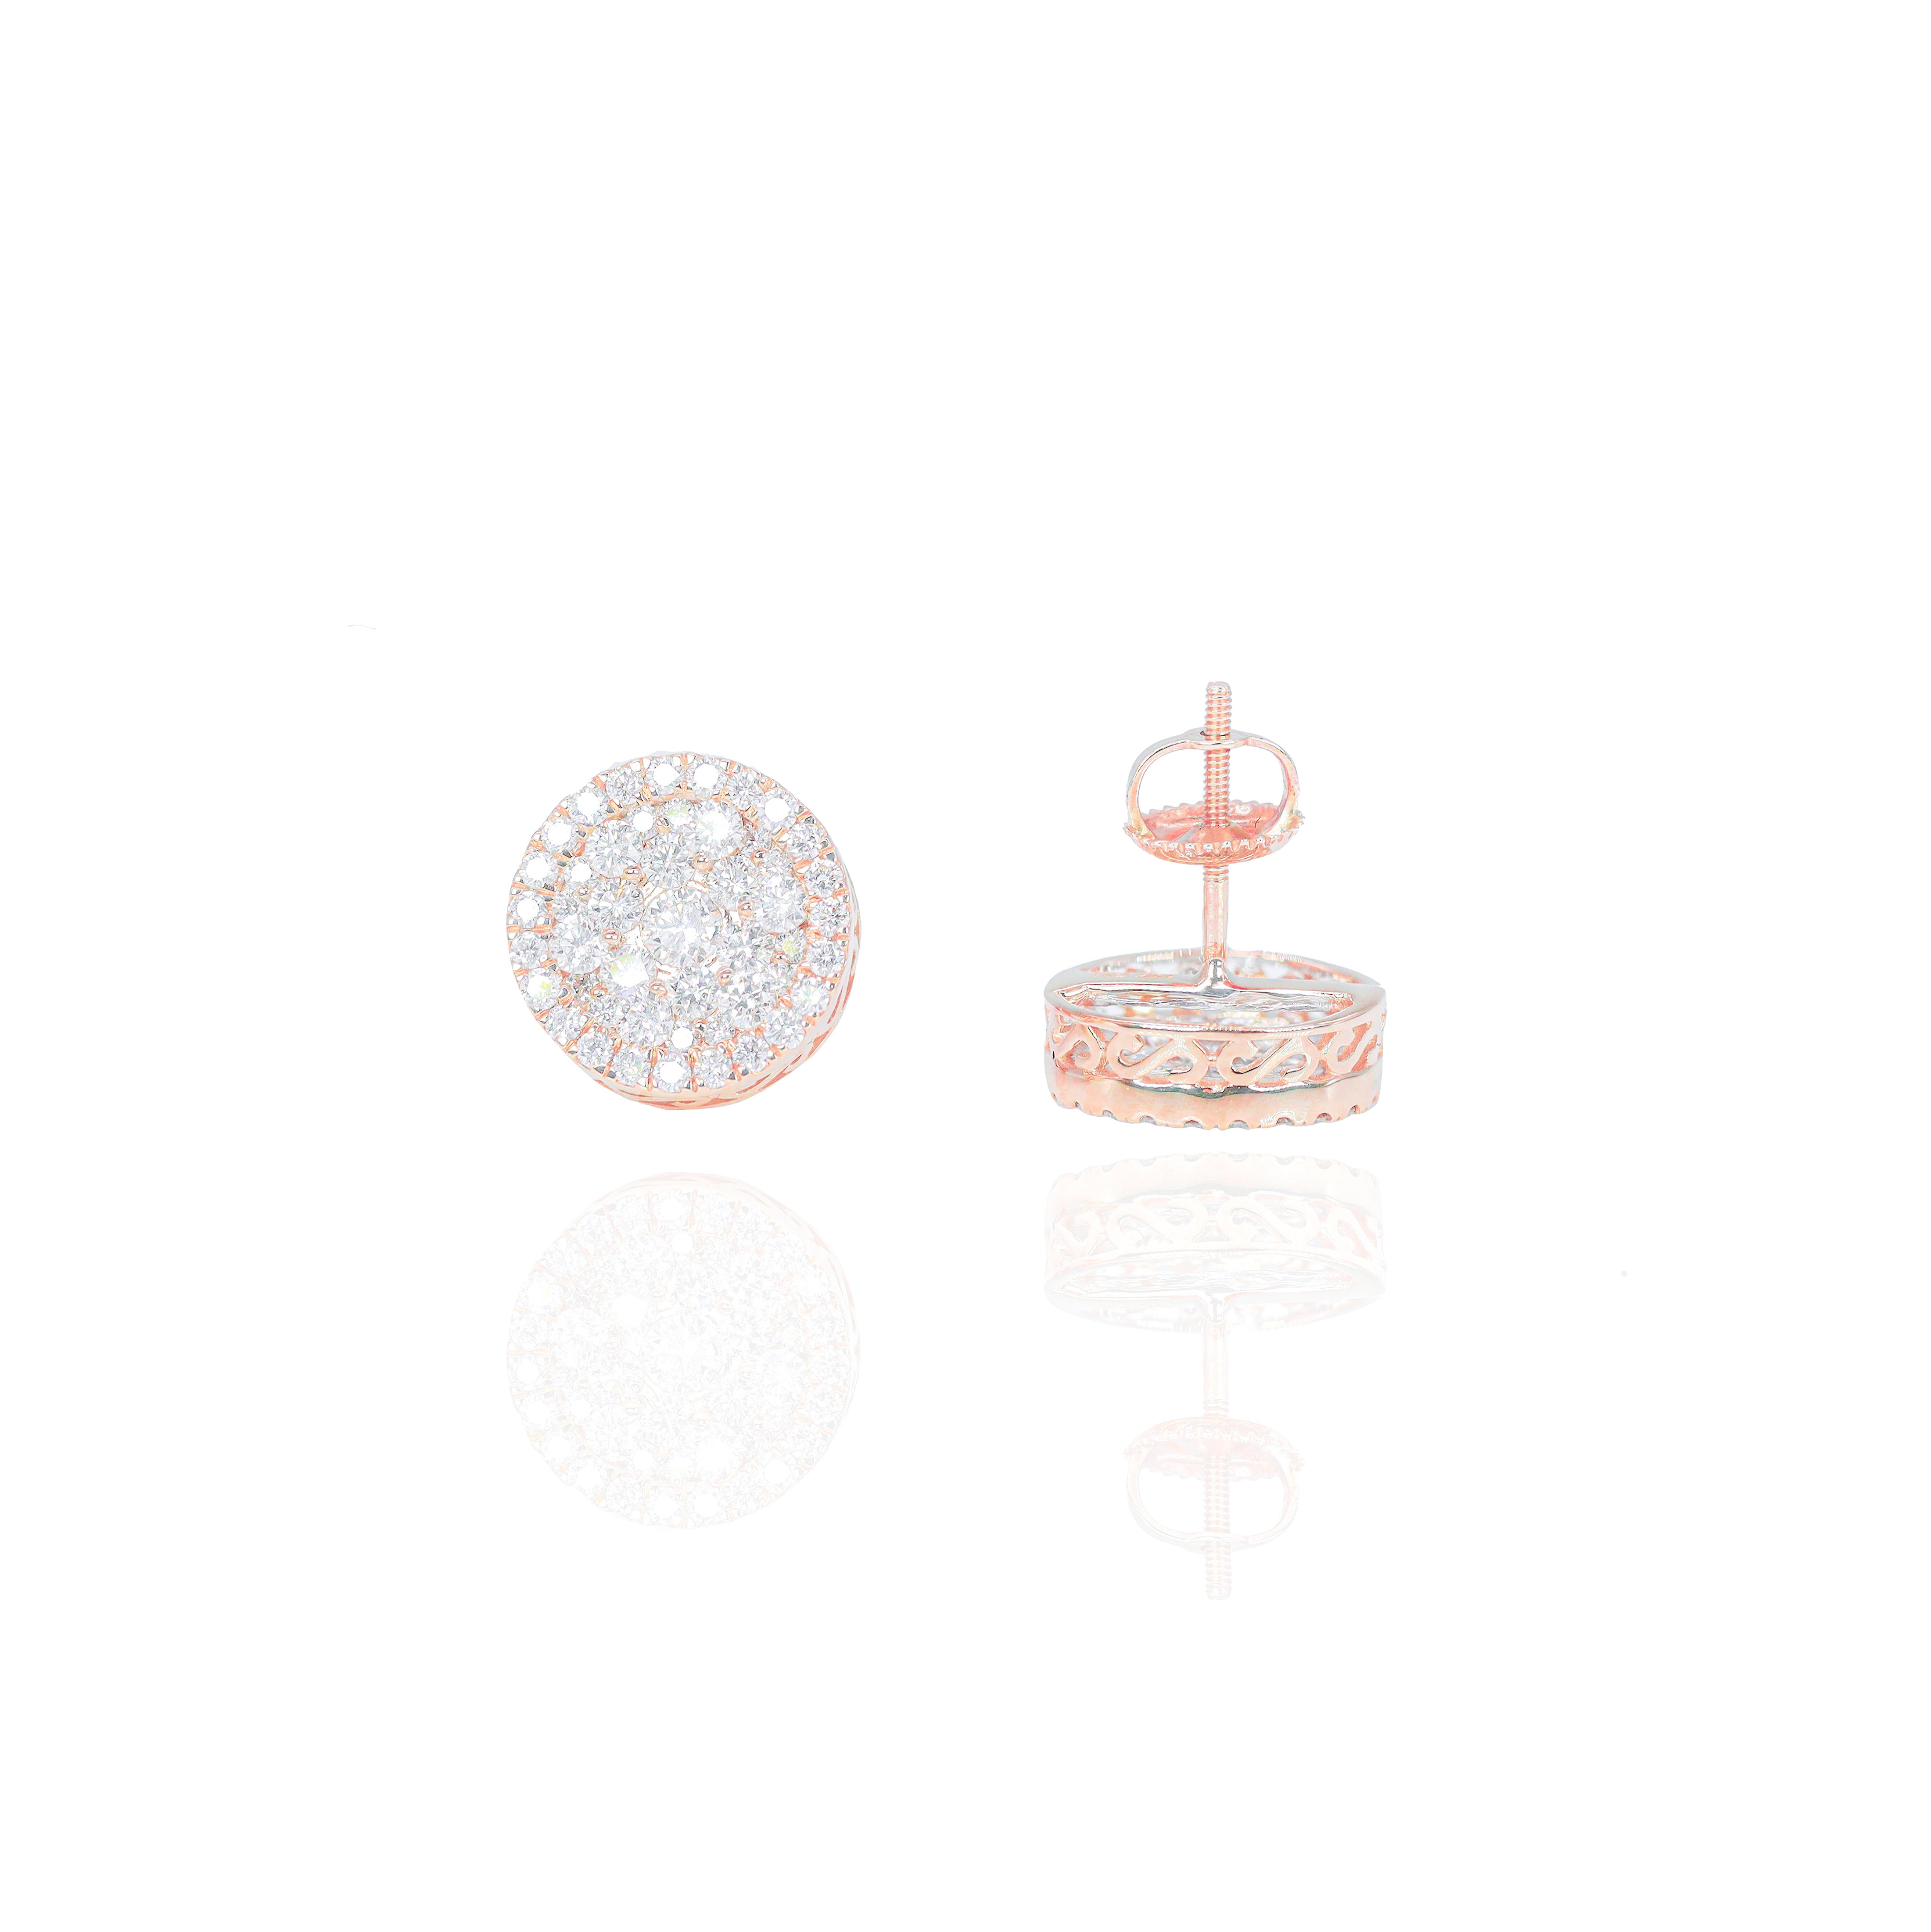 Round Cluster Diamond Earrings with Diamond Border